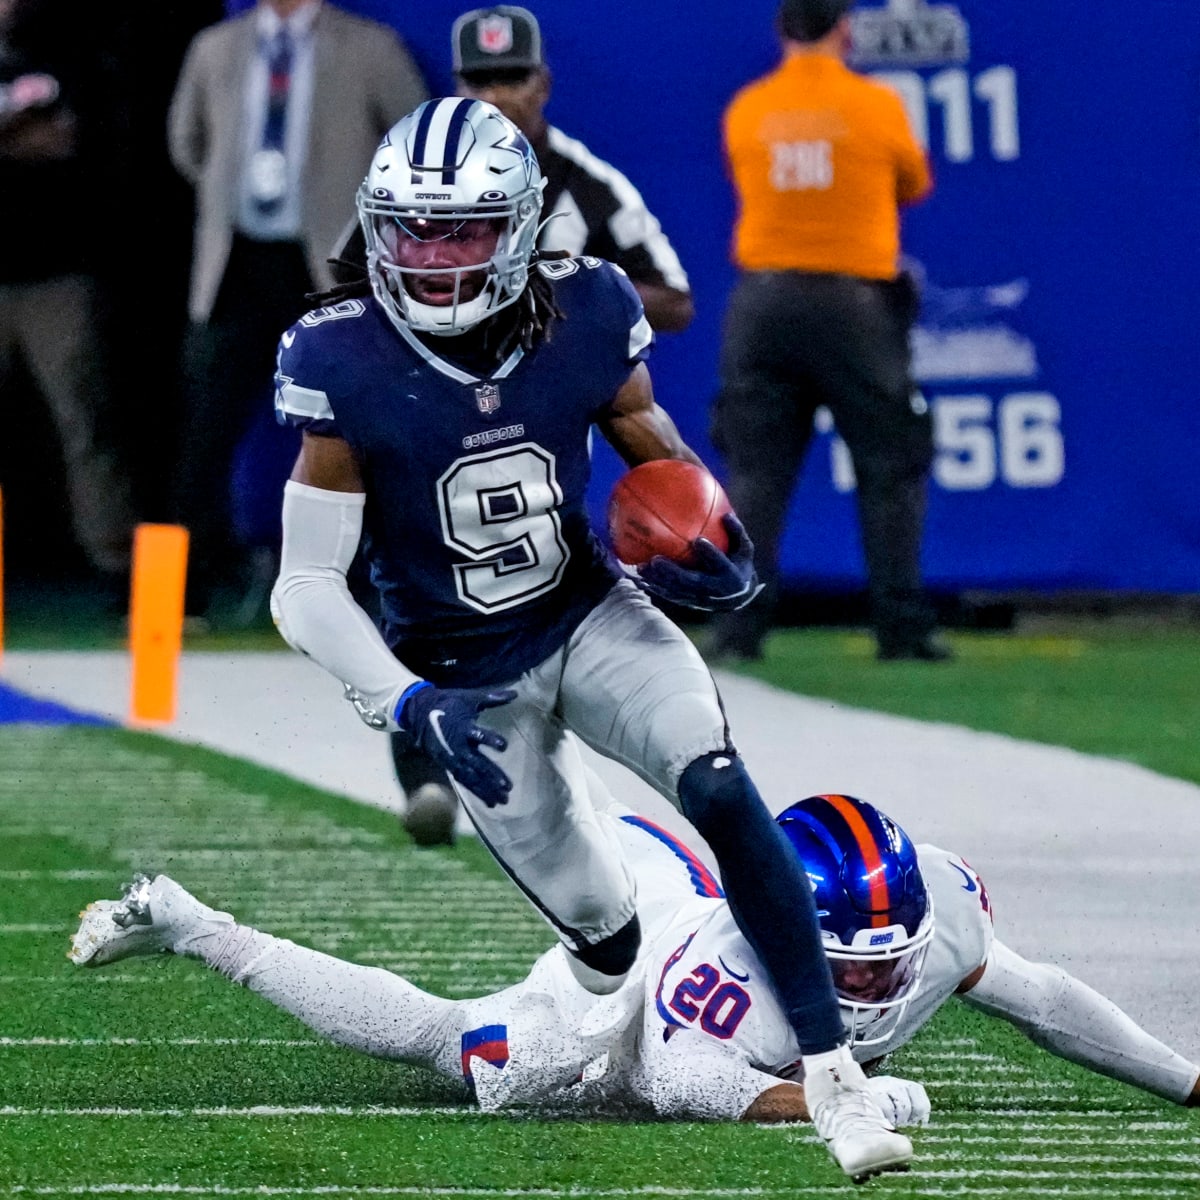 Cowboys vs. Giants score, takeaways: Dallas' defense and special